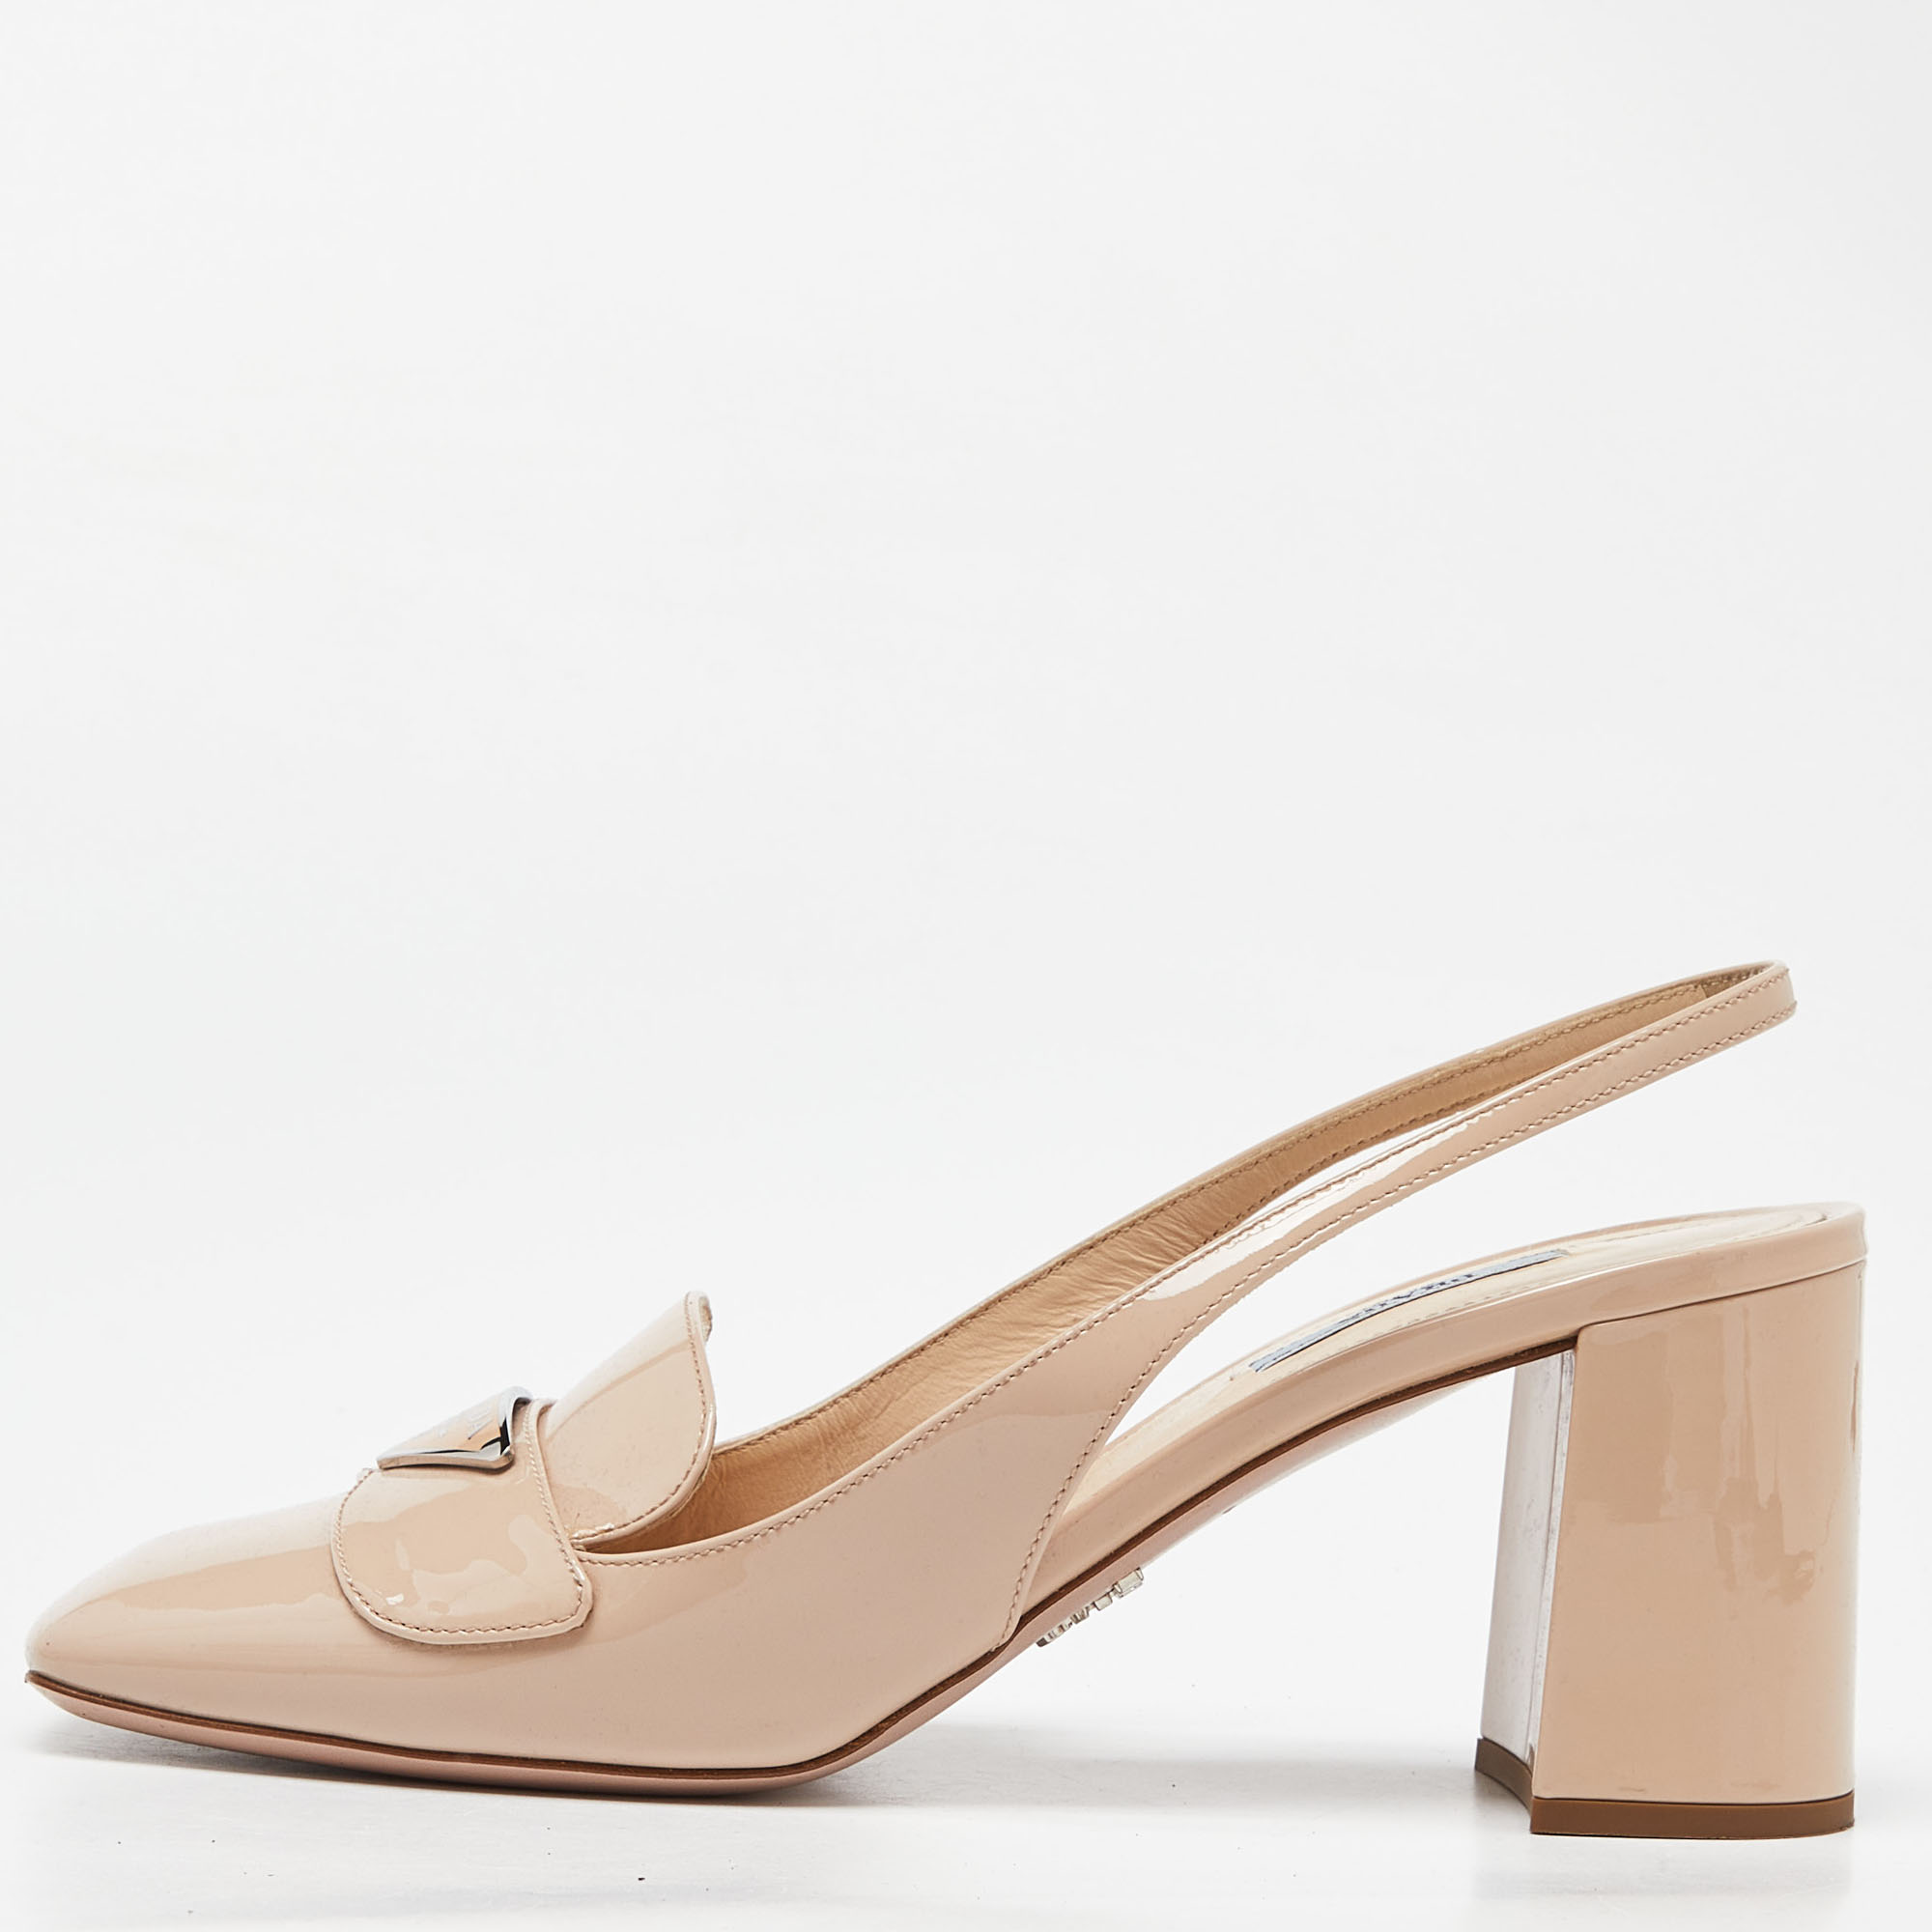 Prada beige patent leather block heel slingback sandals size 39.5